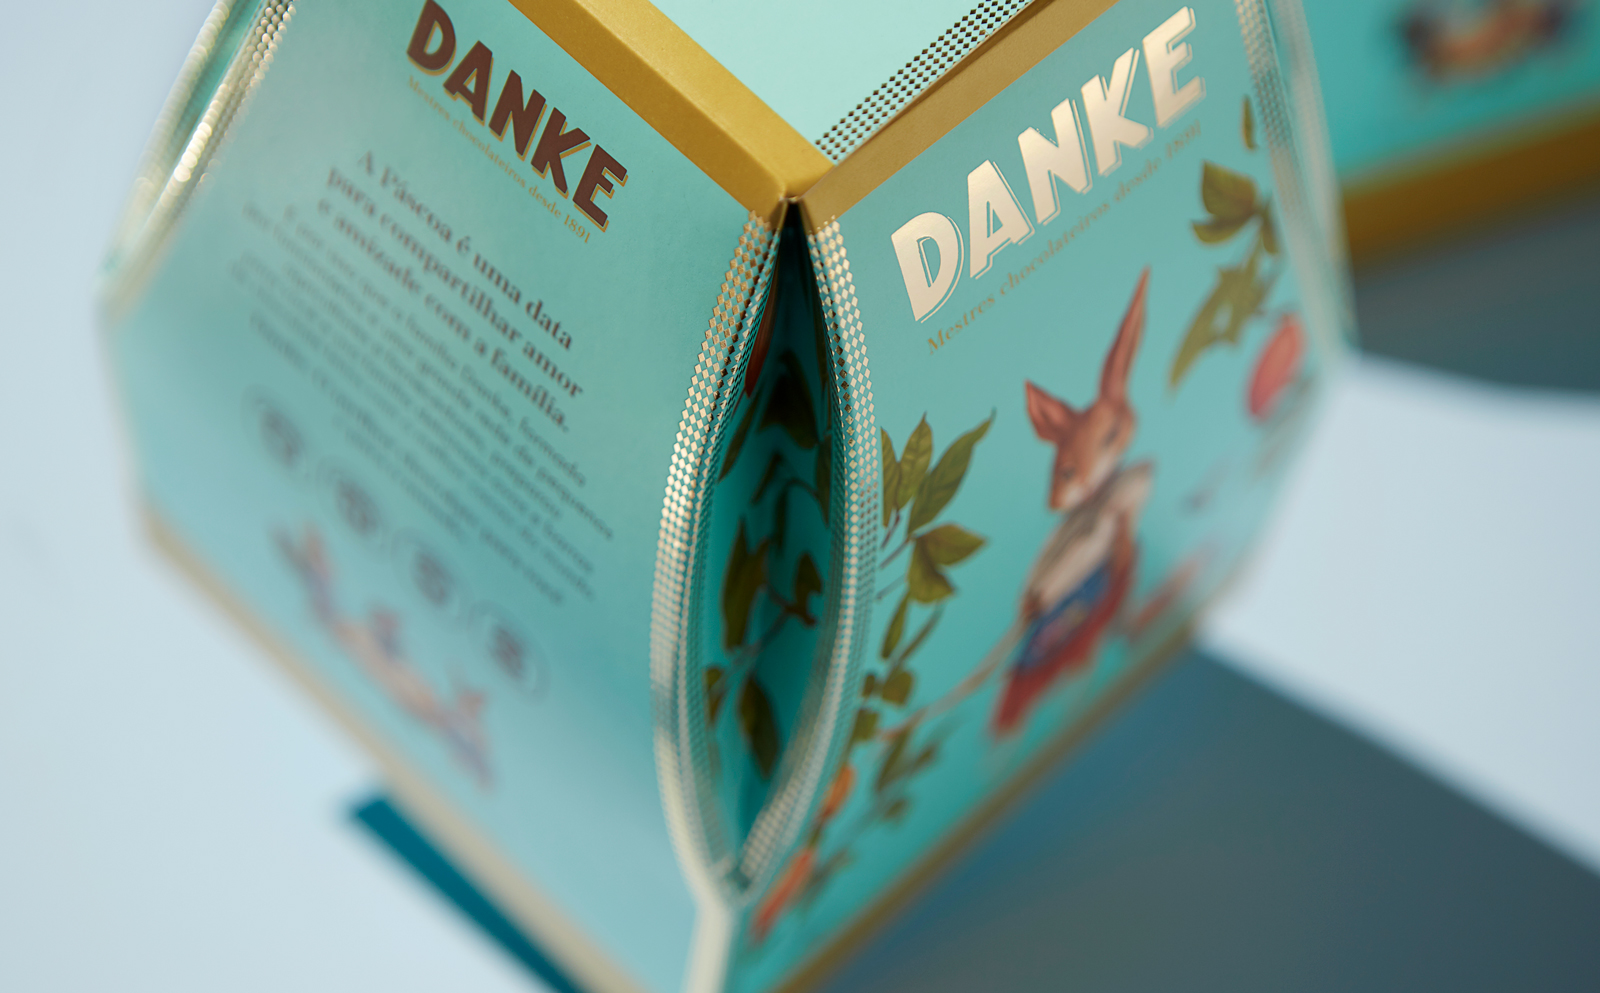 Danke巧克力产品插画风格包装设计欣赏(图4)